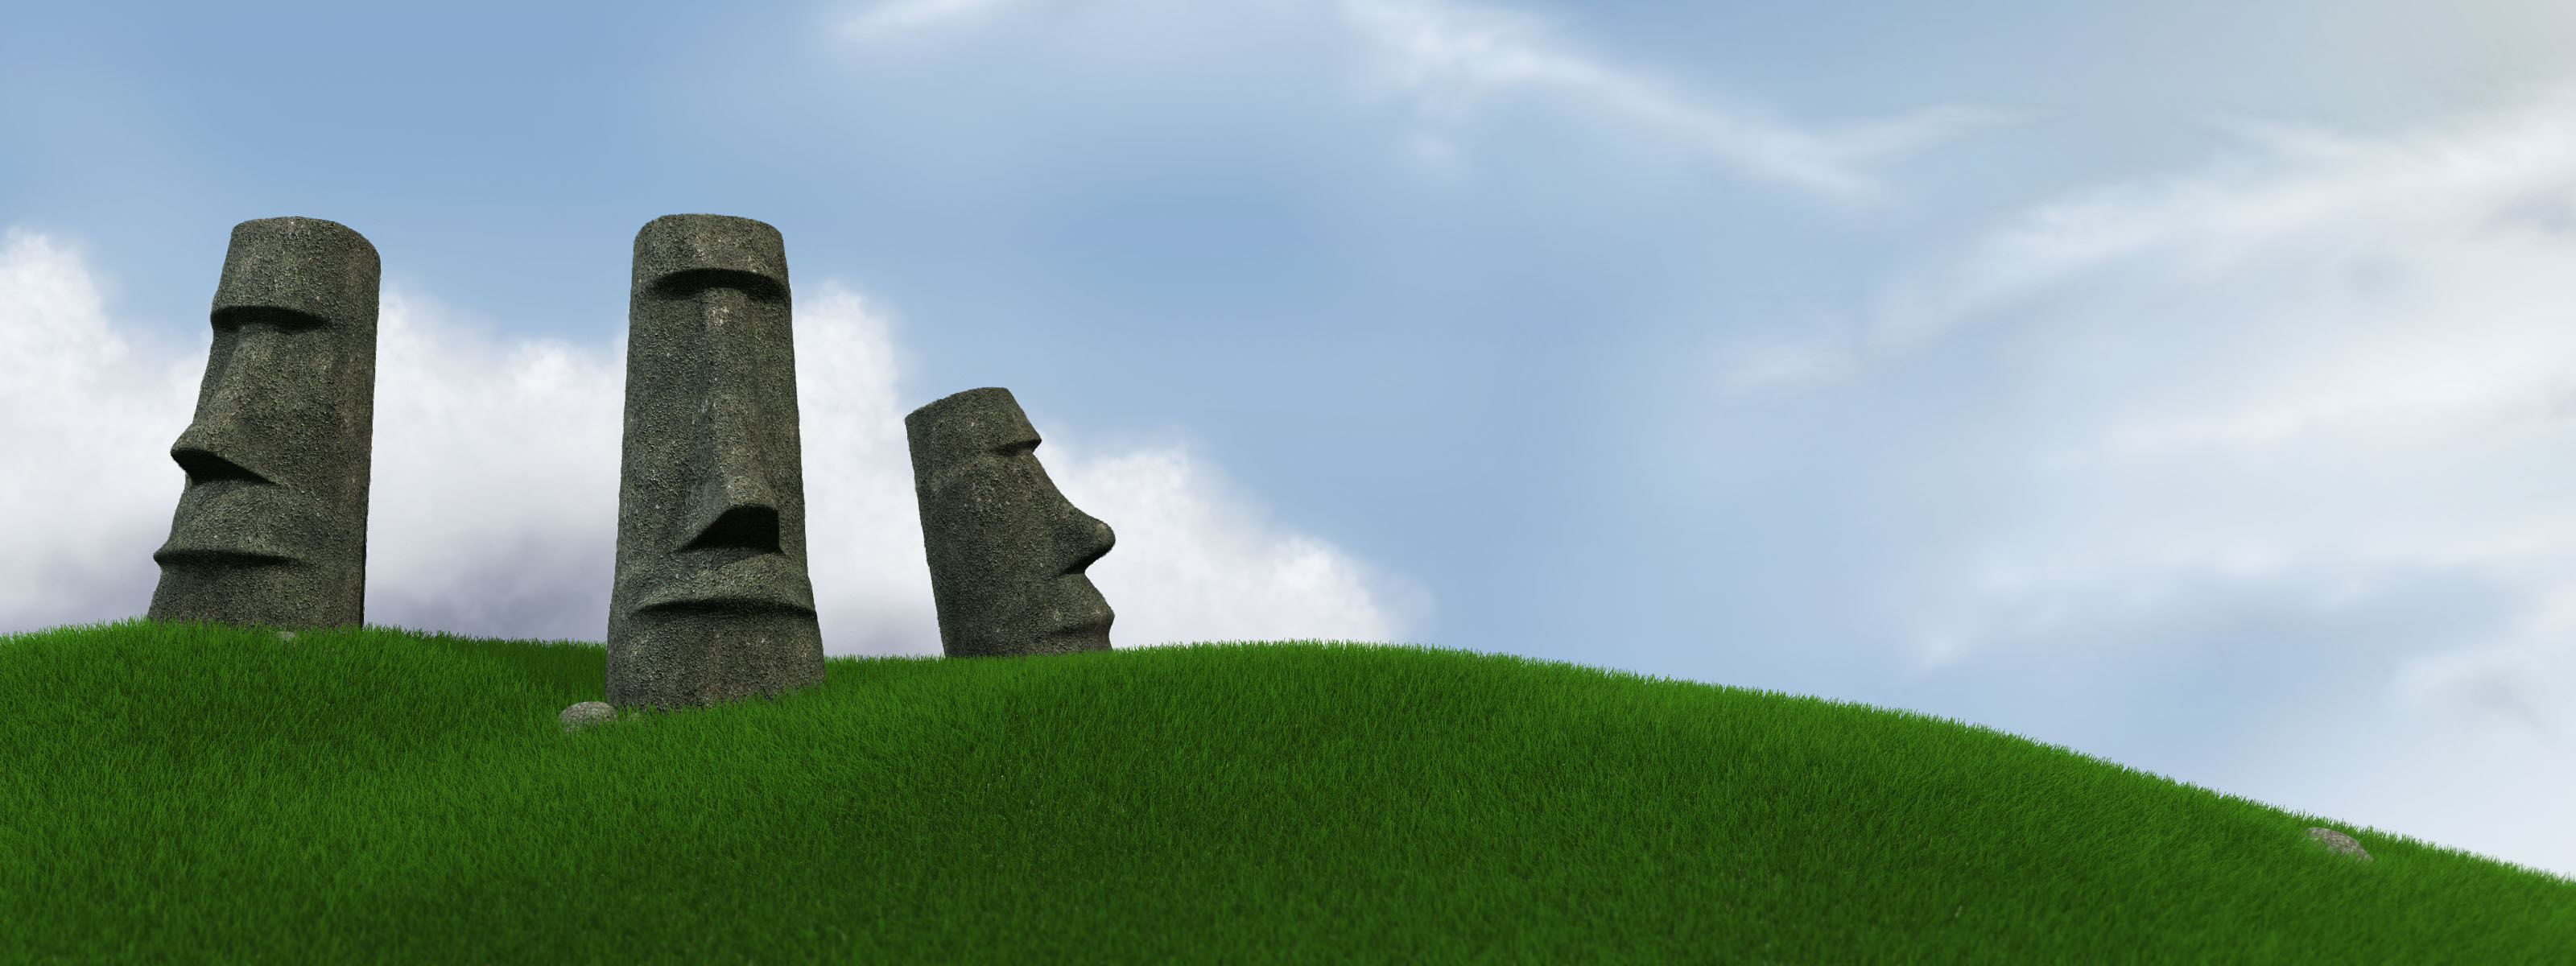 man made, moai, easter island wallpaper for mobile